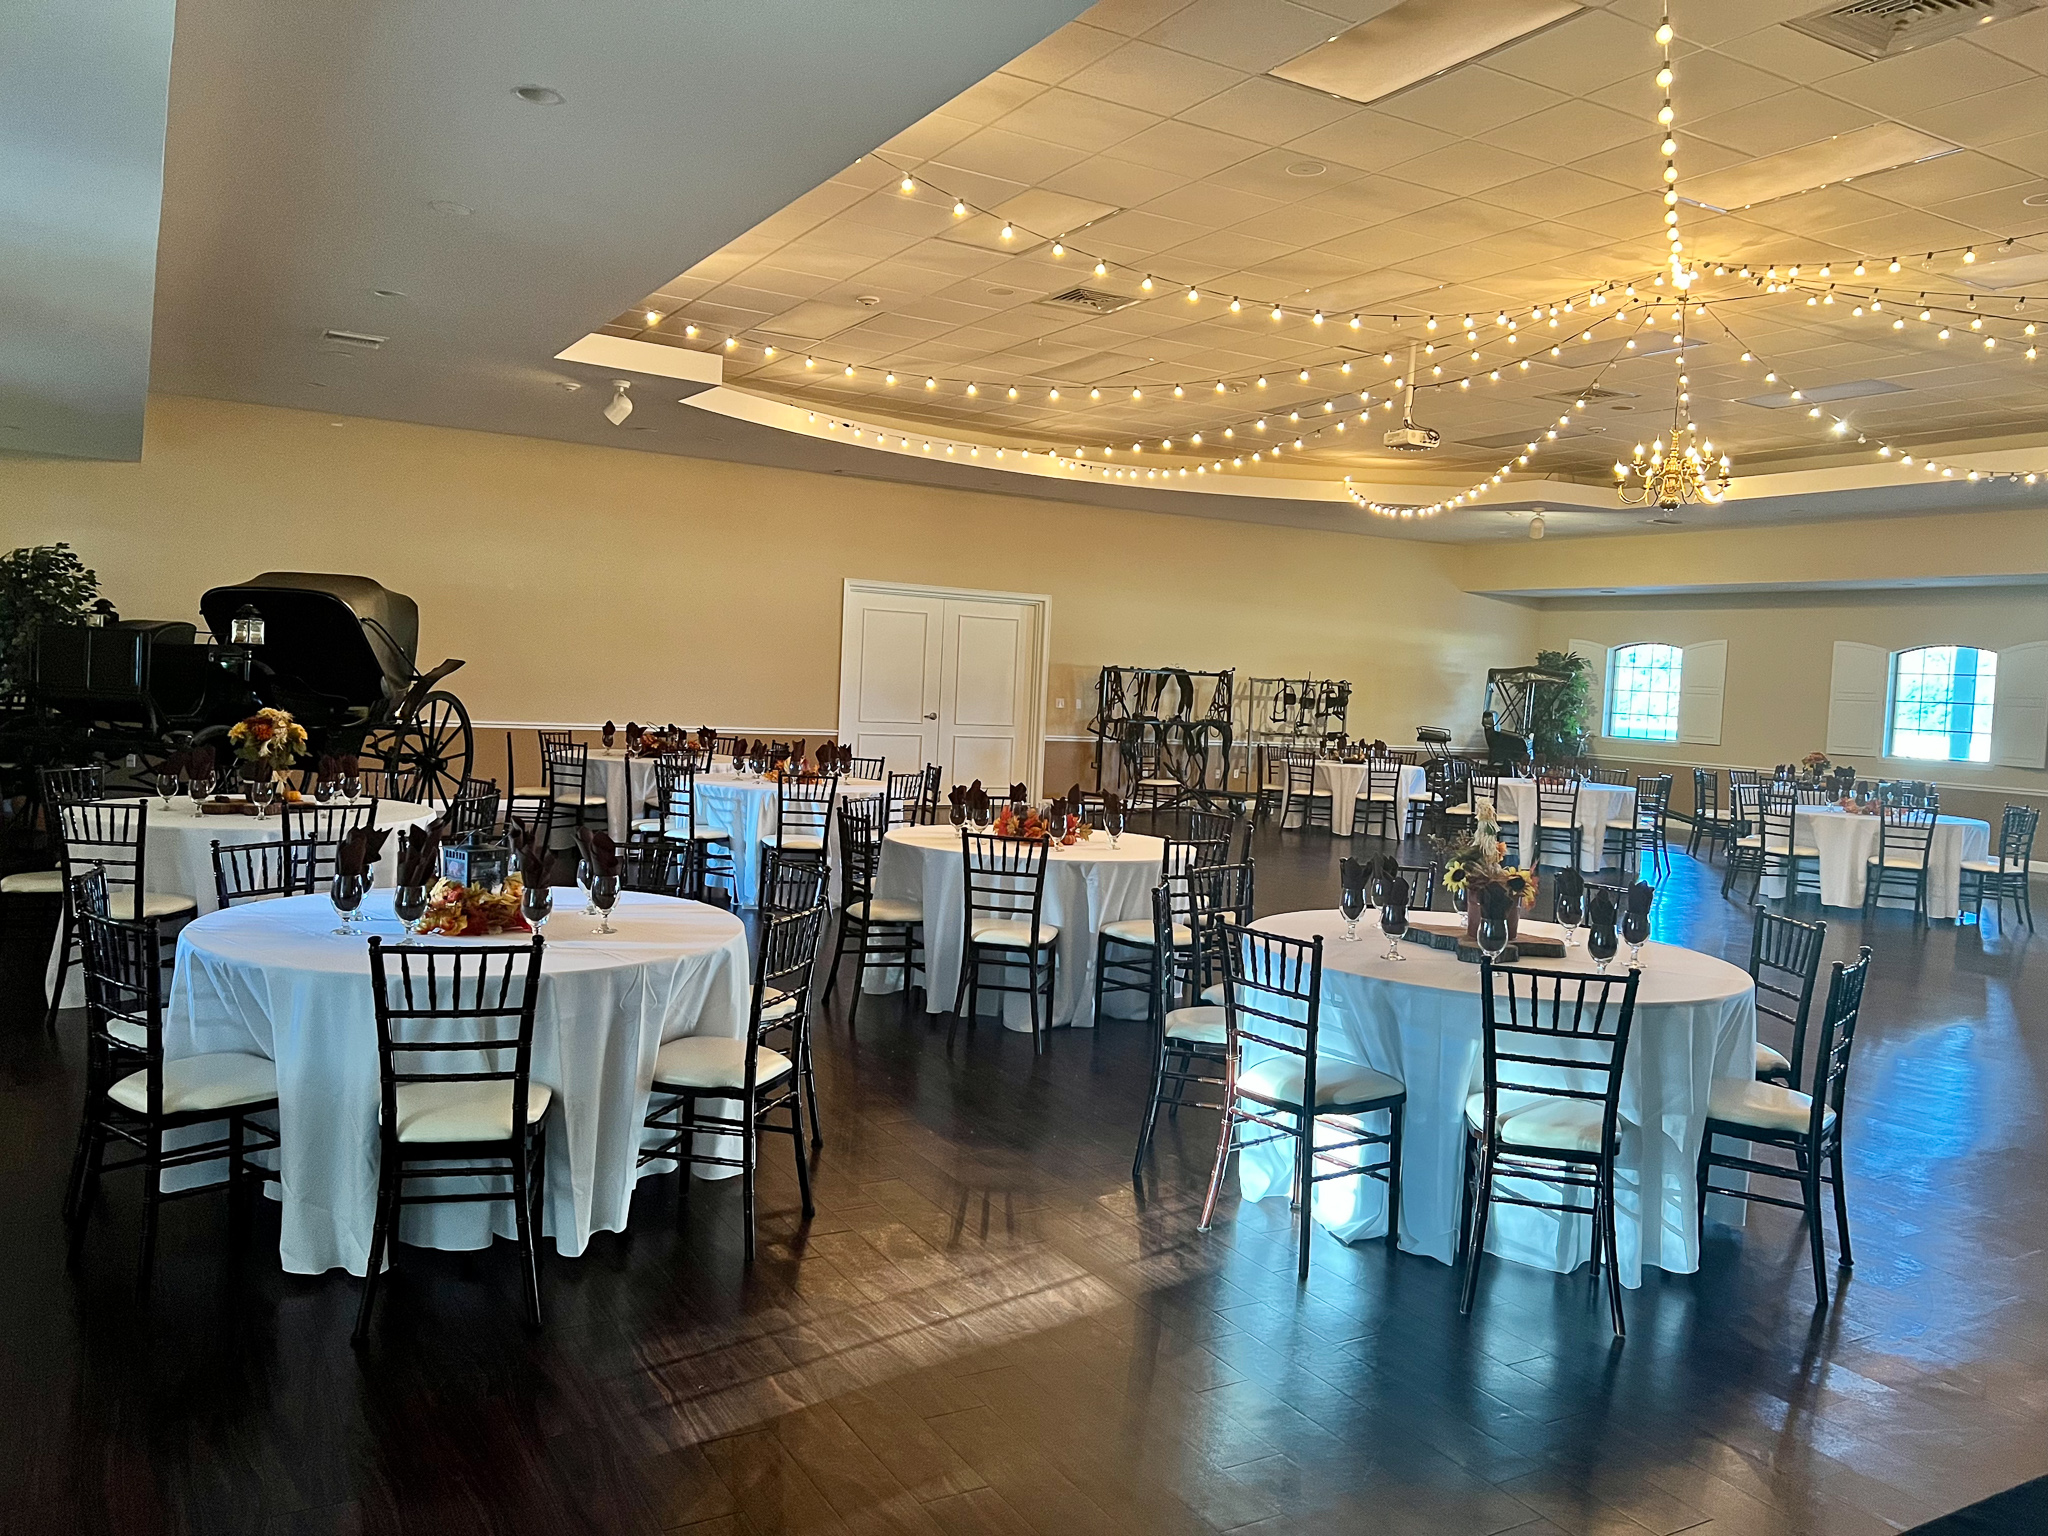 Oak Room banquet hall near The Villages, Florida